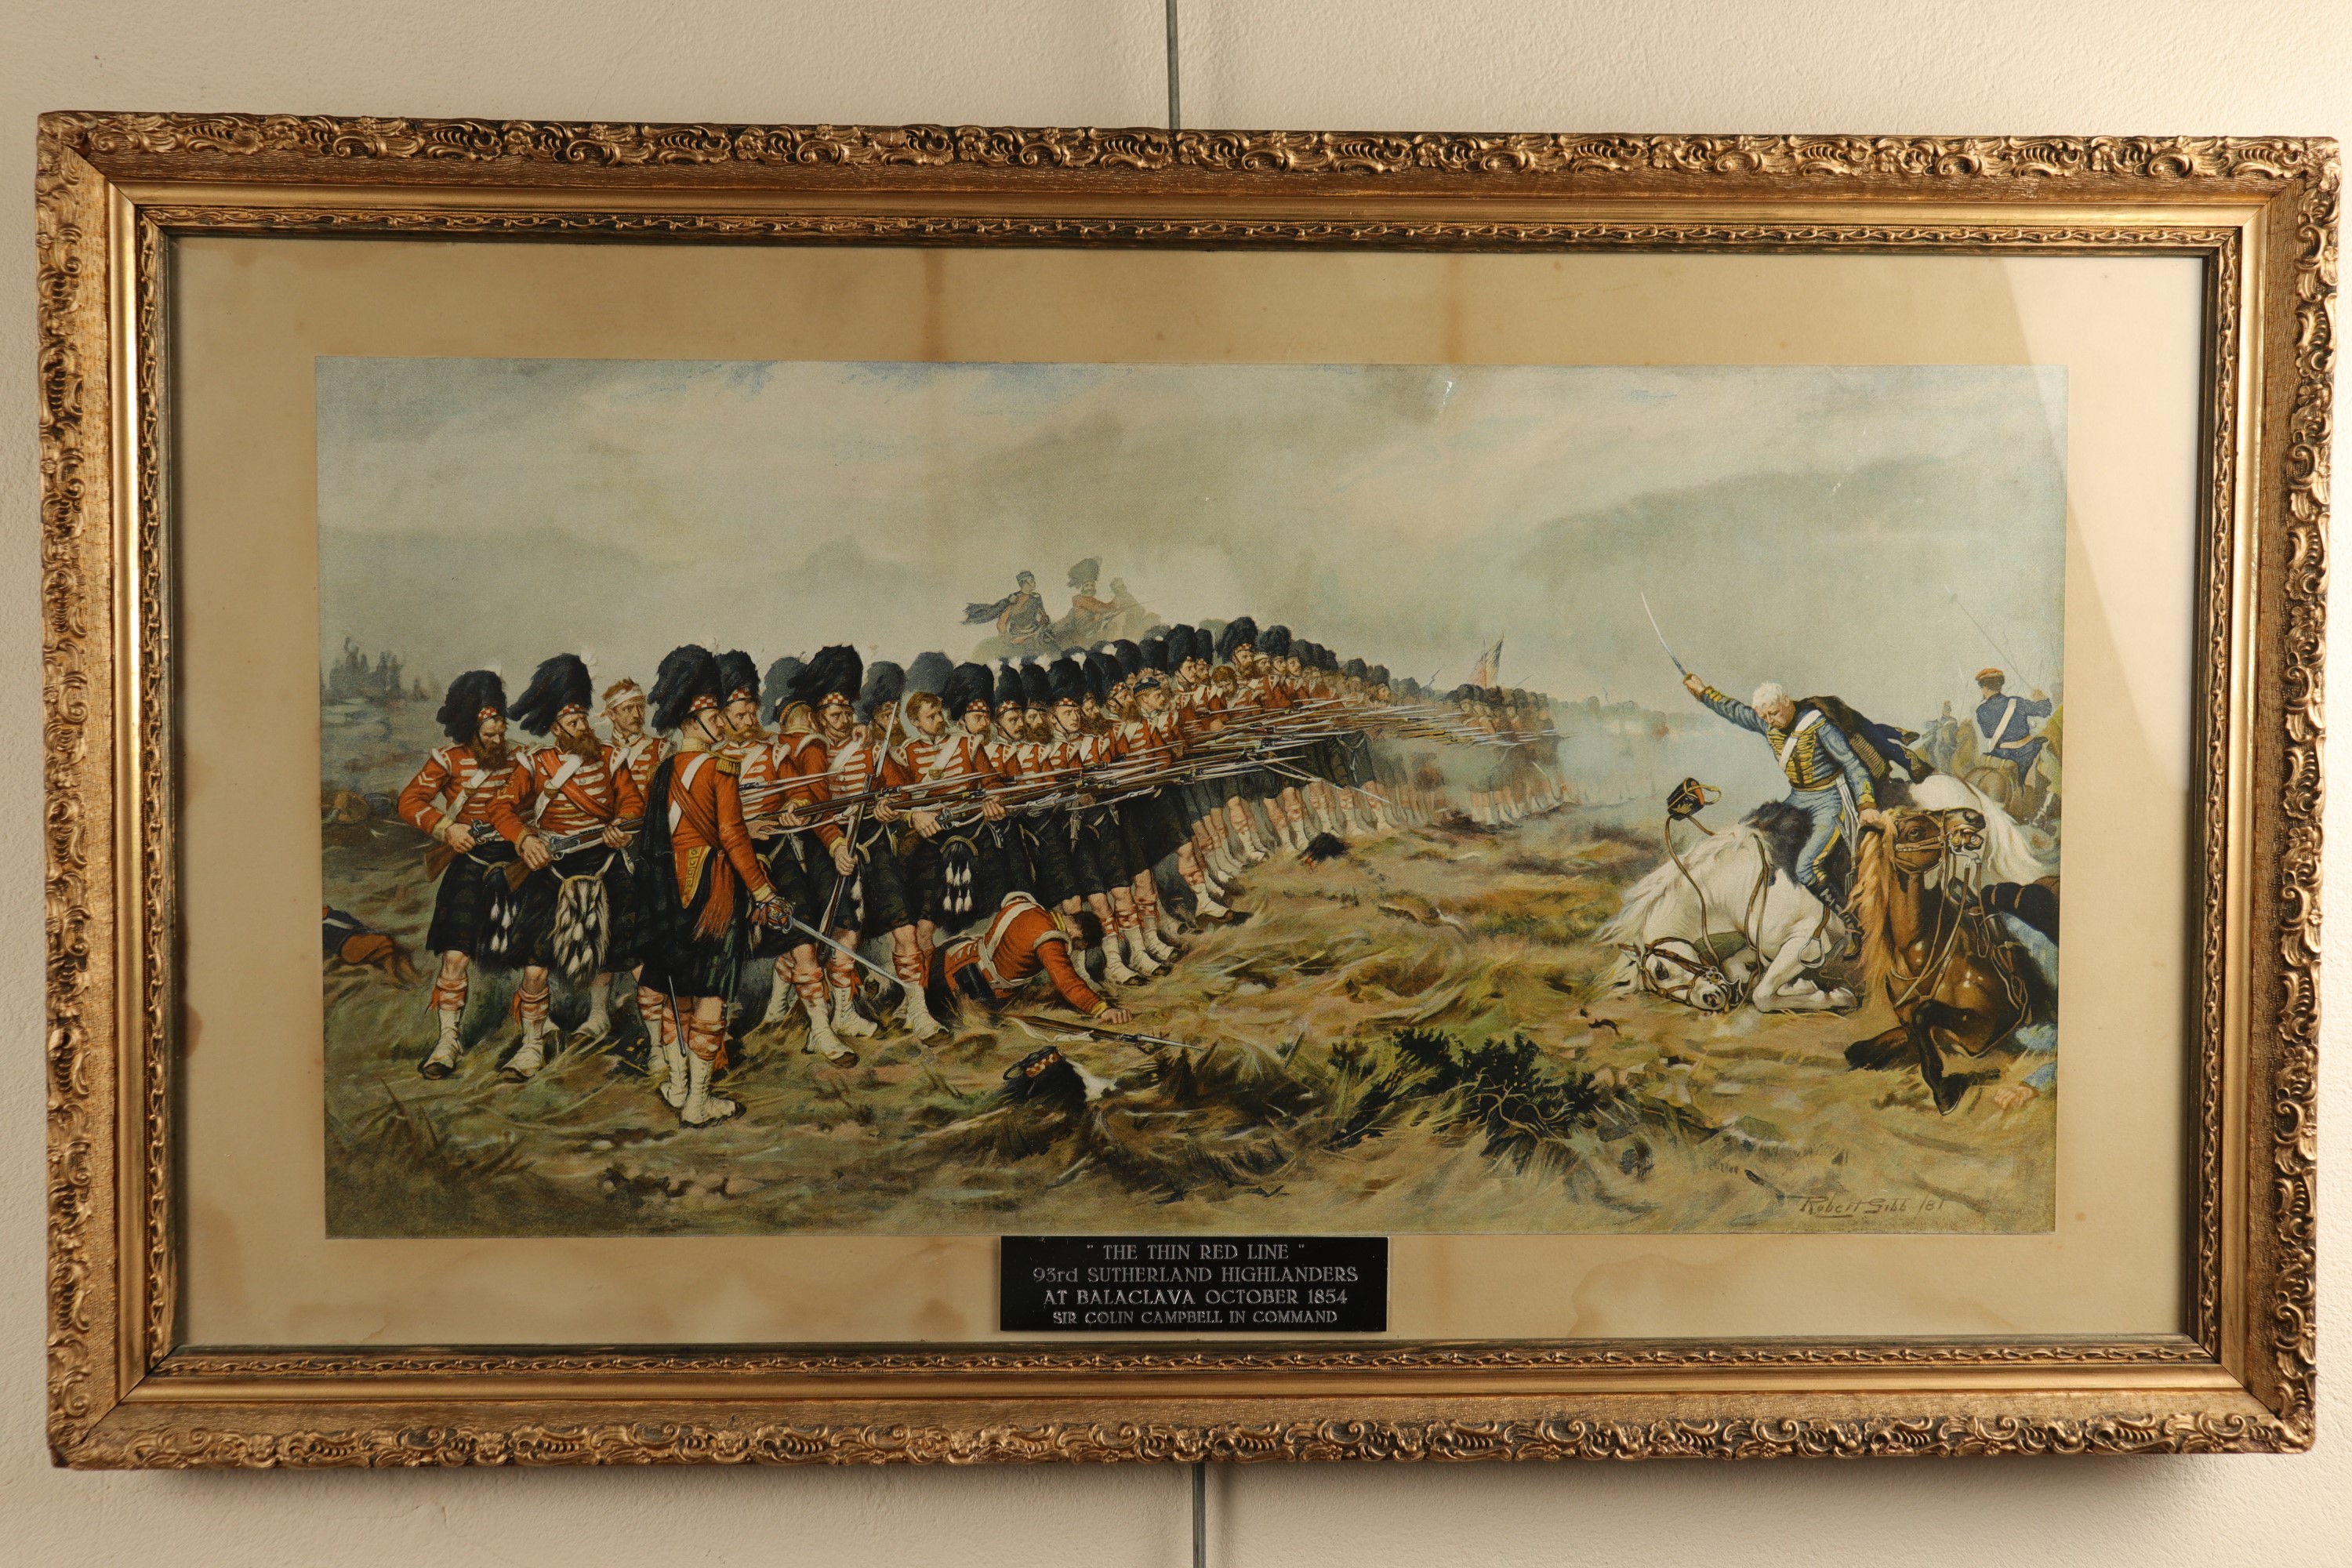 After Robert Gibb RSA (1845 - 1932) "The Thin Red Line, 93rd Highlanders at Balaclava, Crimean War",